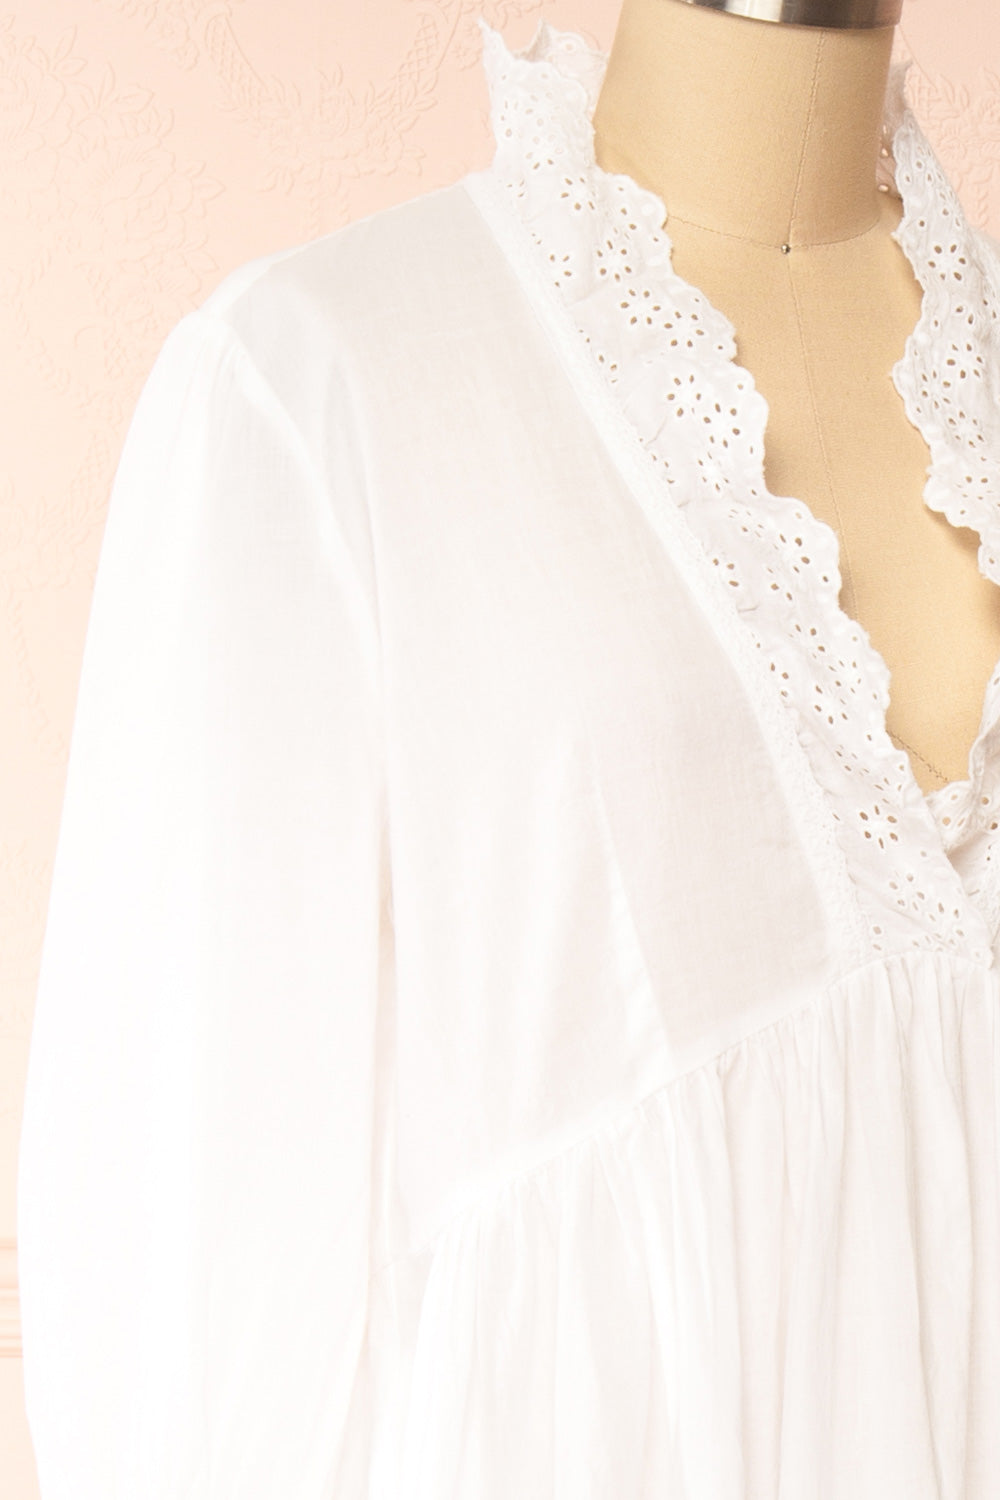 Doriane White Cotton Nightgown | Boutique 1861 side